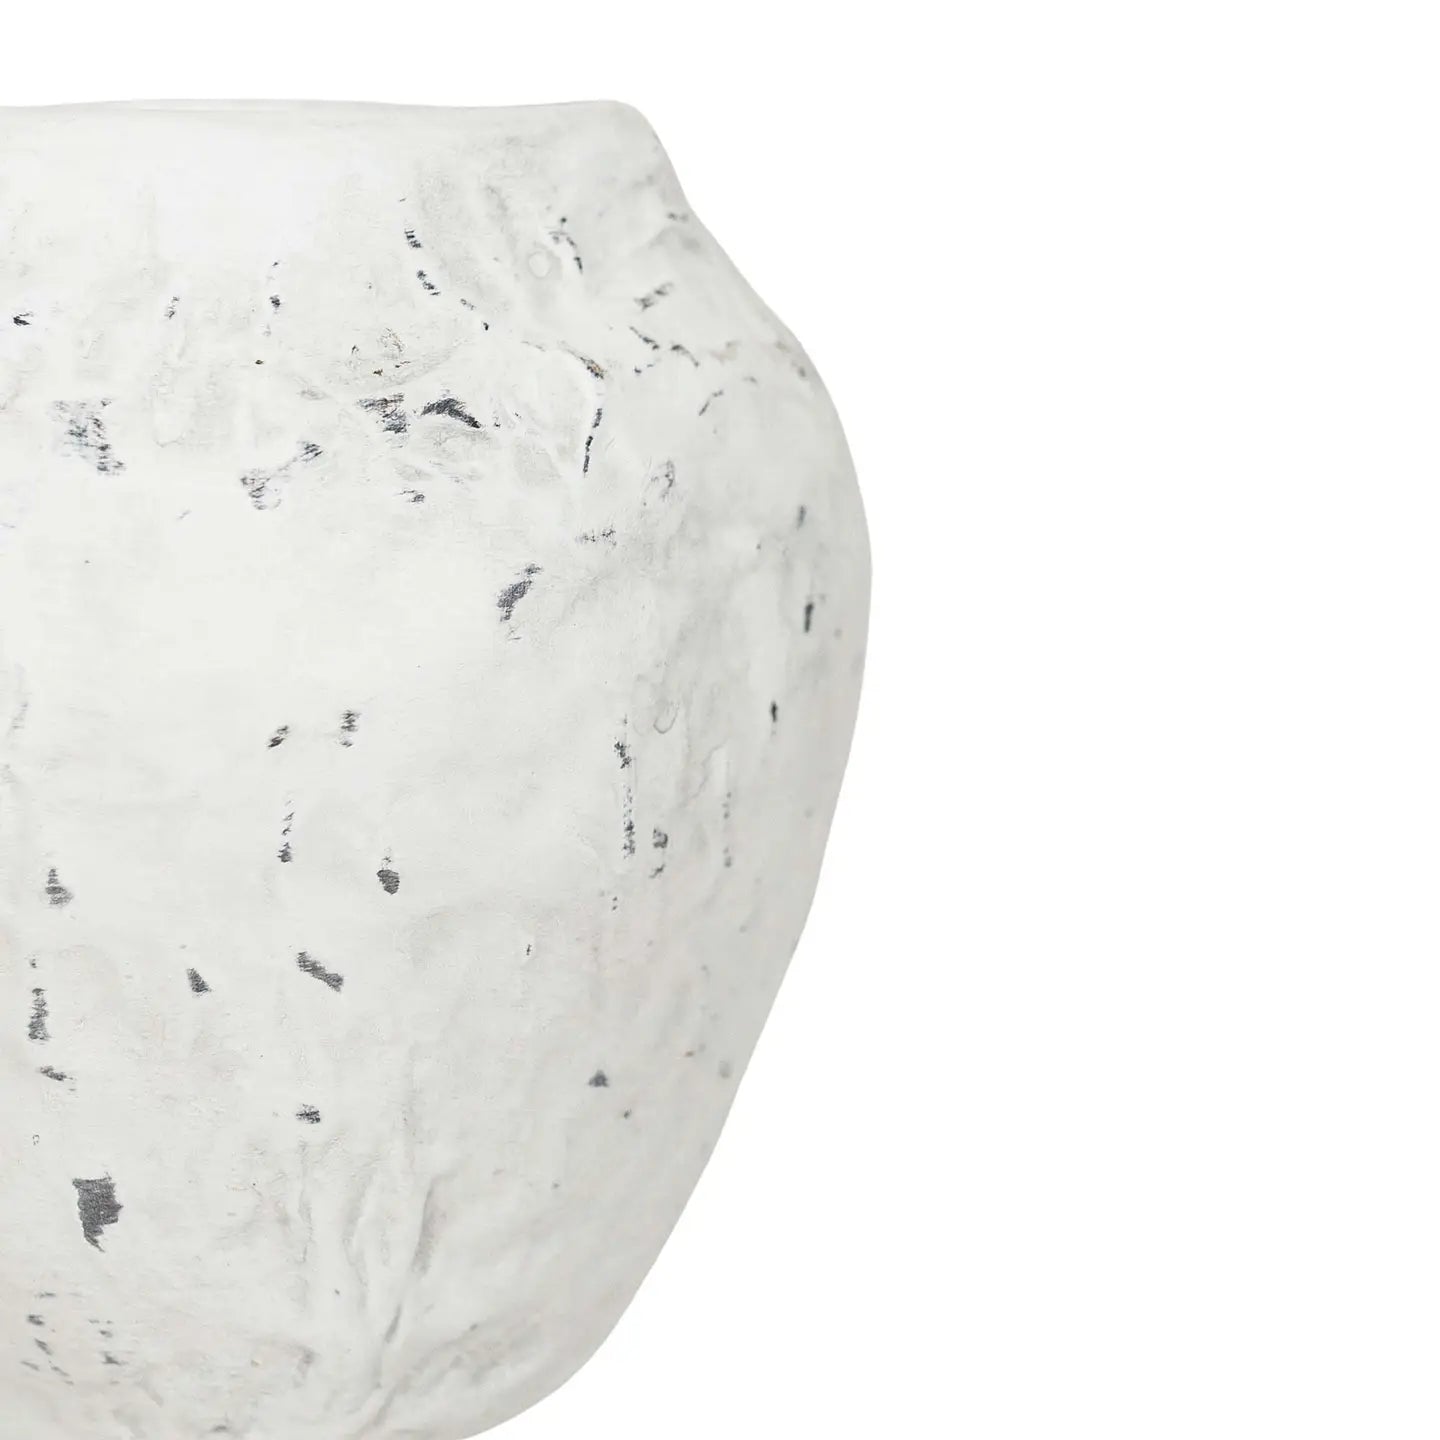 Ambrosine Vase White